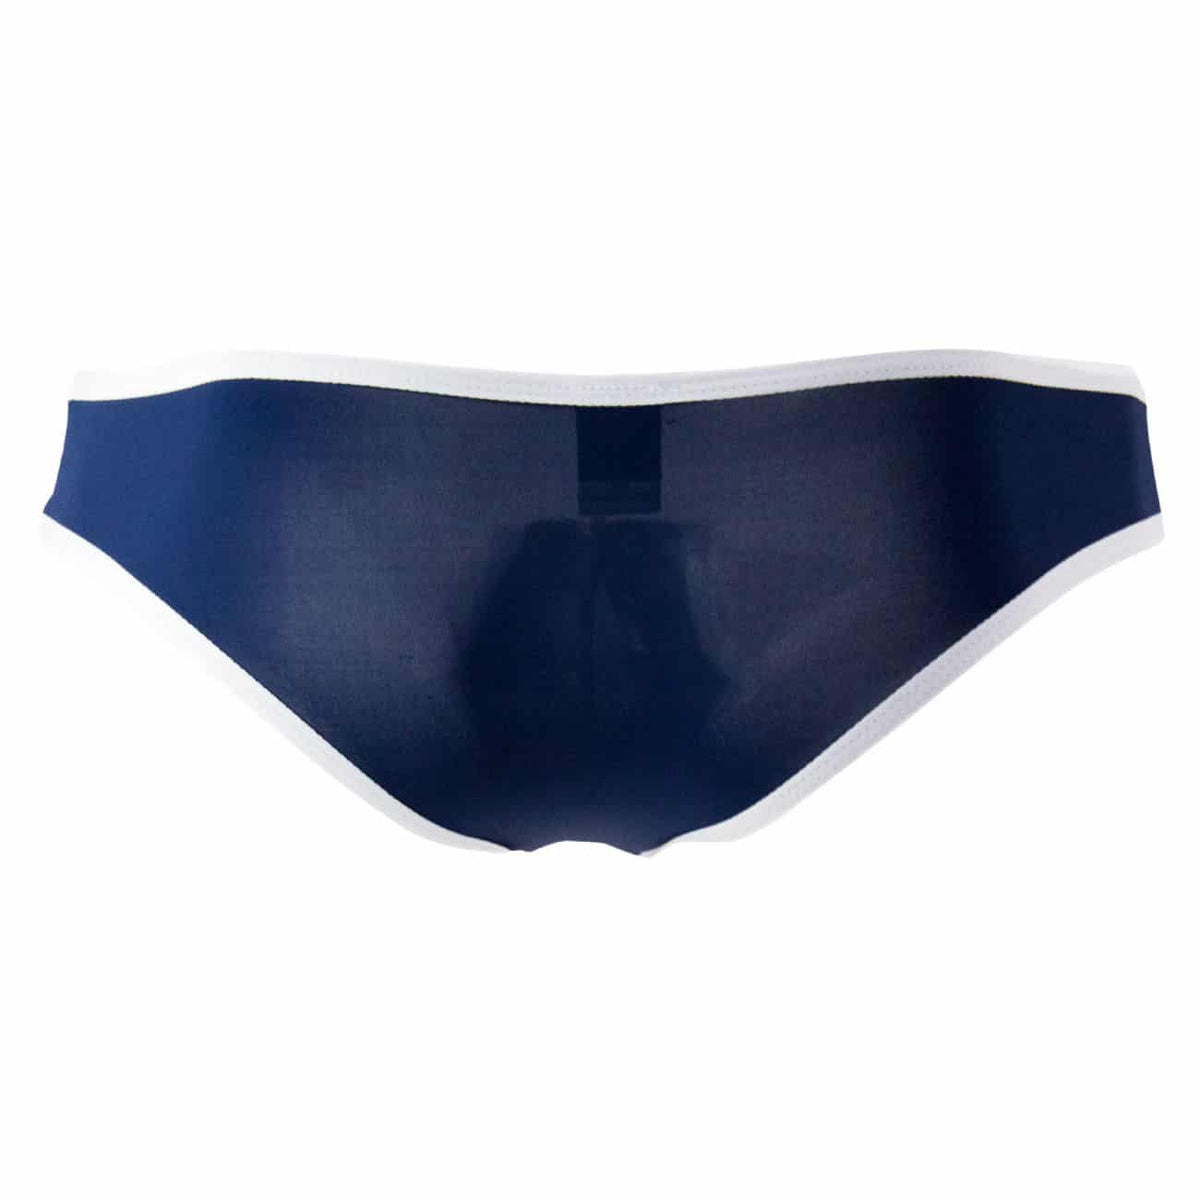 PetitQ Underwear Men's Bikini Ceyrat | Shop MensUnderwear.io